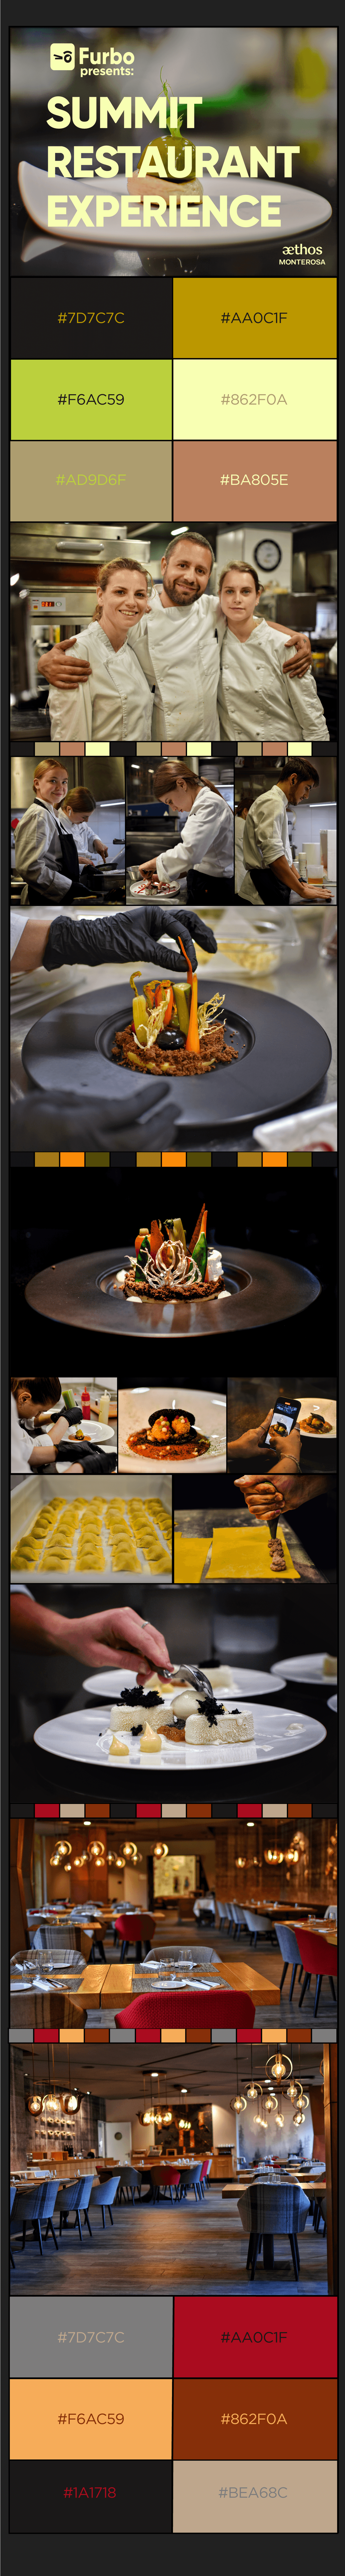 Social Media Design Fotografia Photography  restaurant gourmet ristorante food photography Social media post marketing   foodphotography